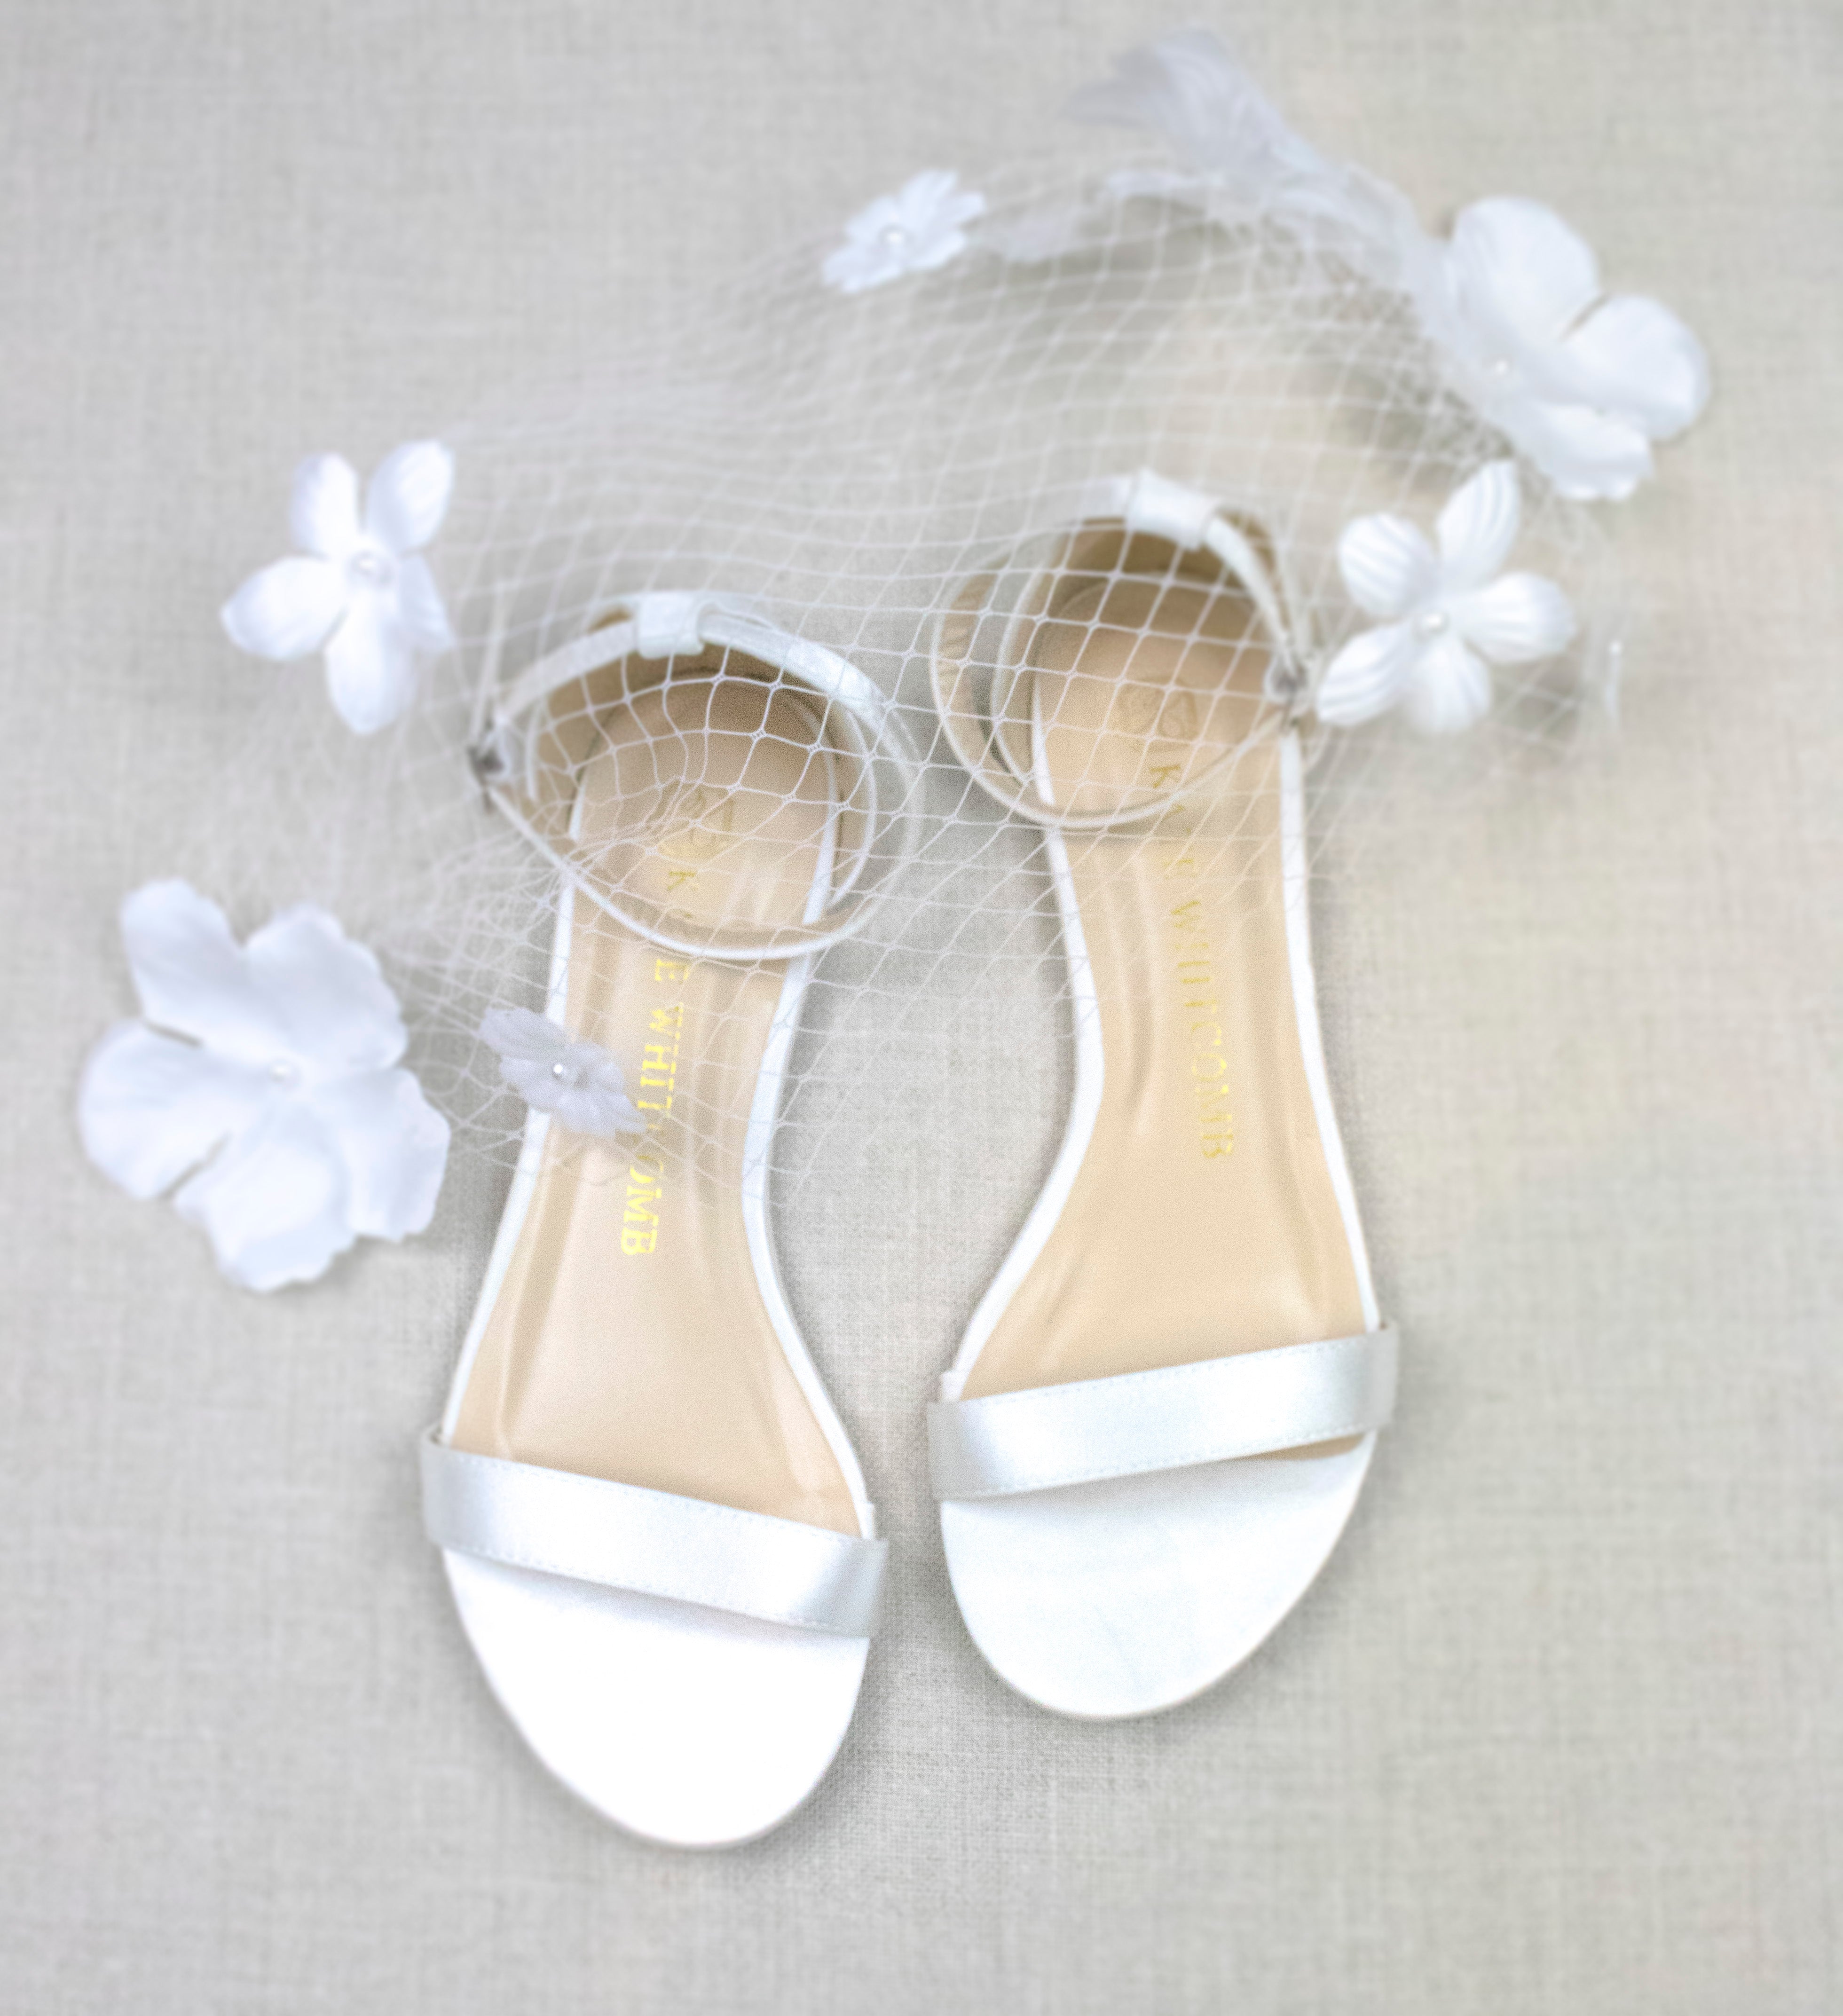 white comfortable wedding shoes